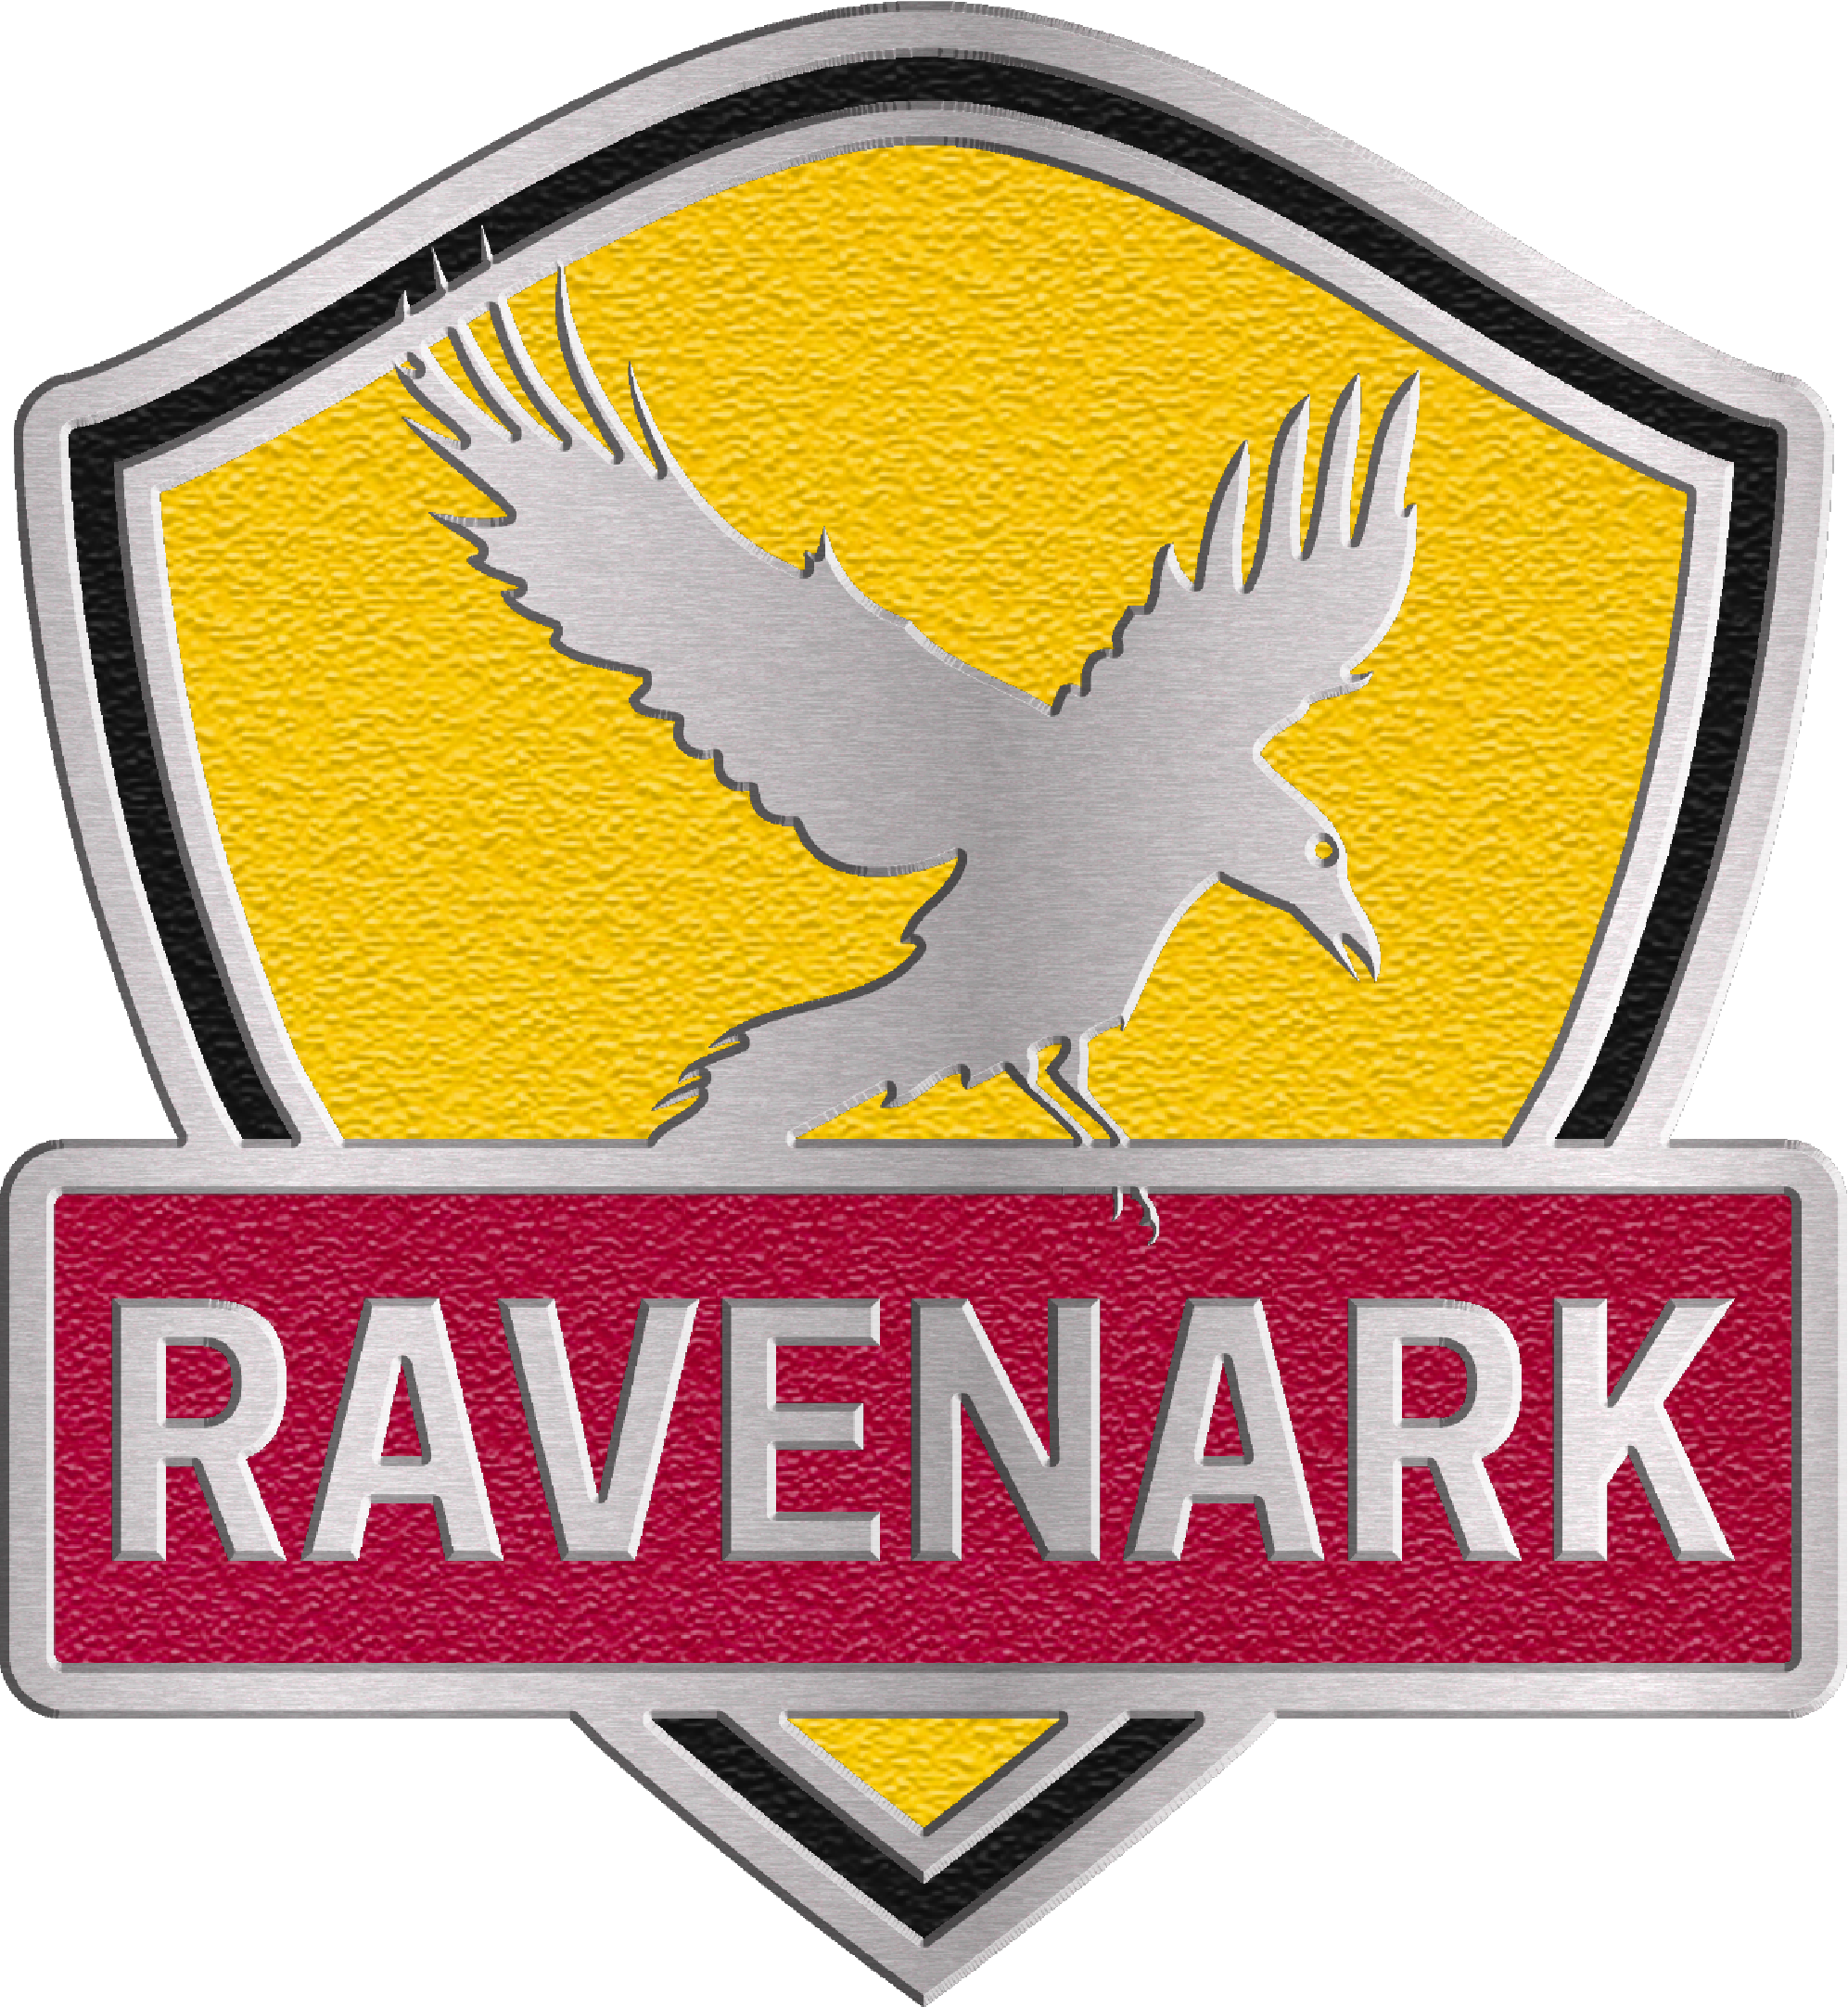 Ravenark Boats Logo Image